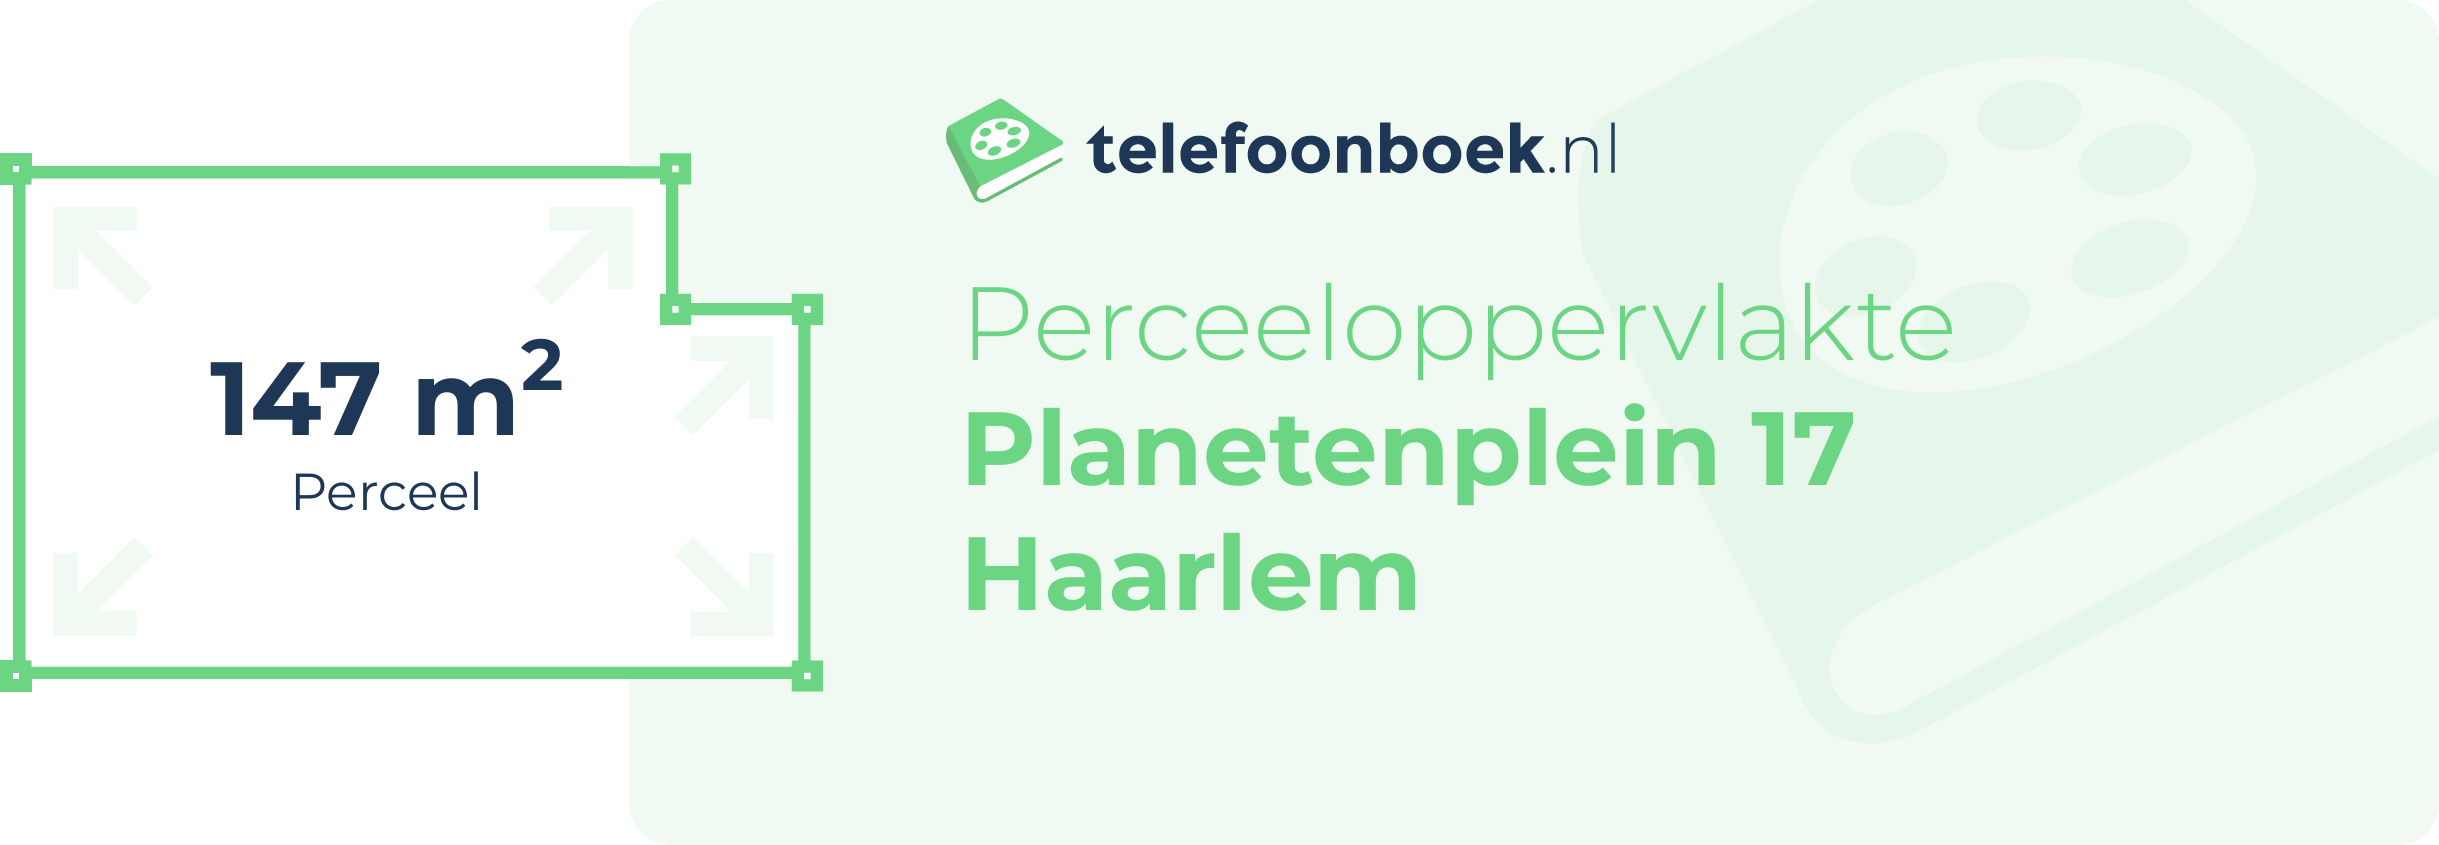 Perceeloppervlakte Planetenplein 17 Haarlem